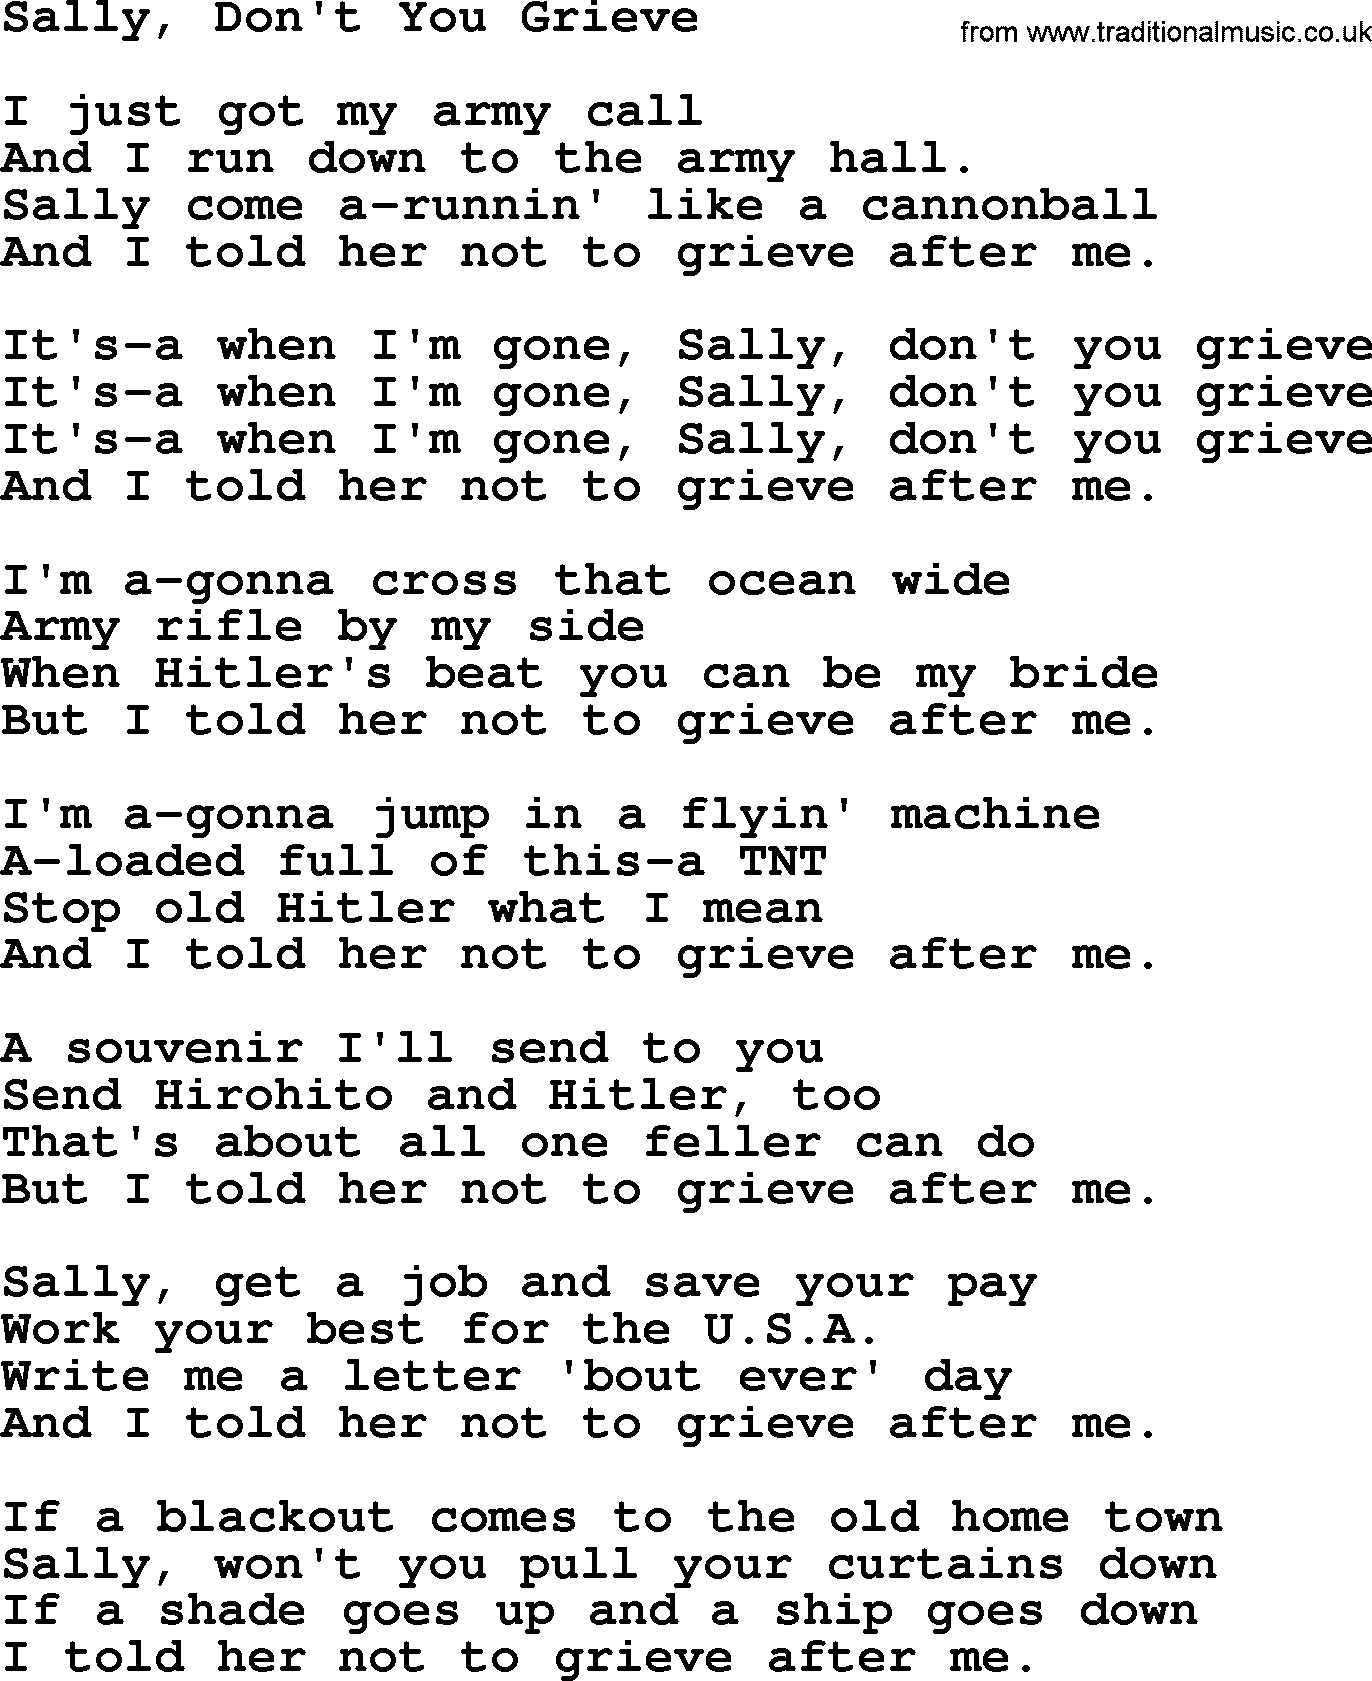 Woody Guthrie song Sally Dont You Grieve lyrics